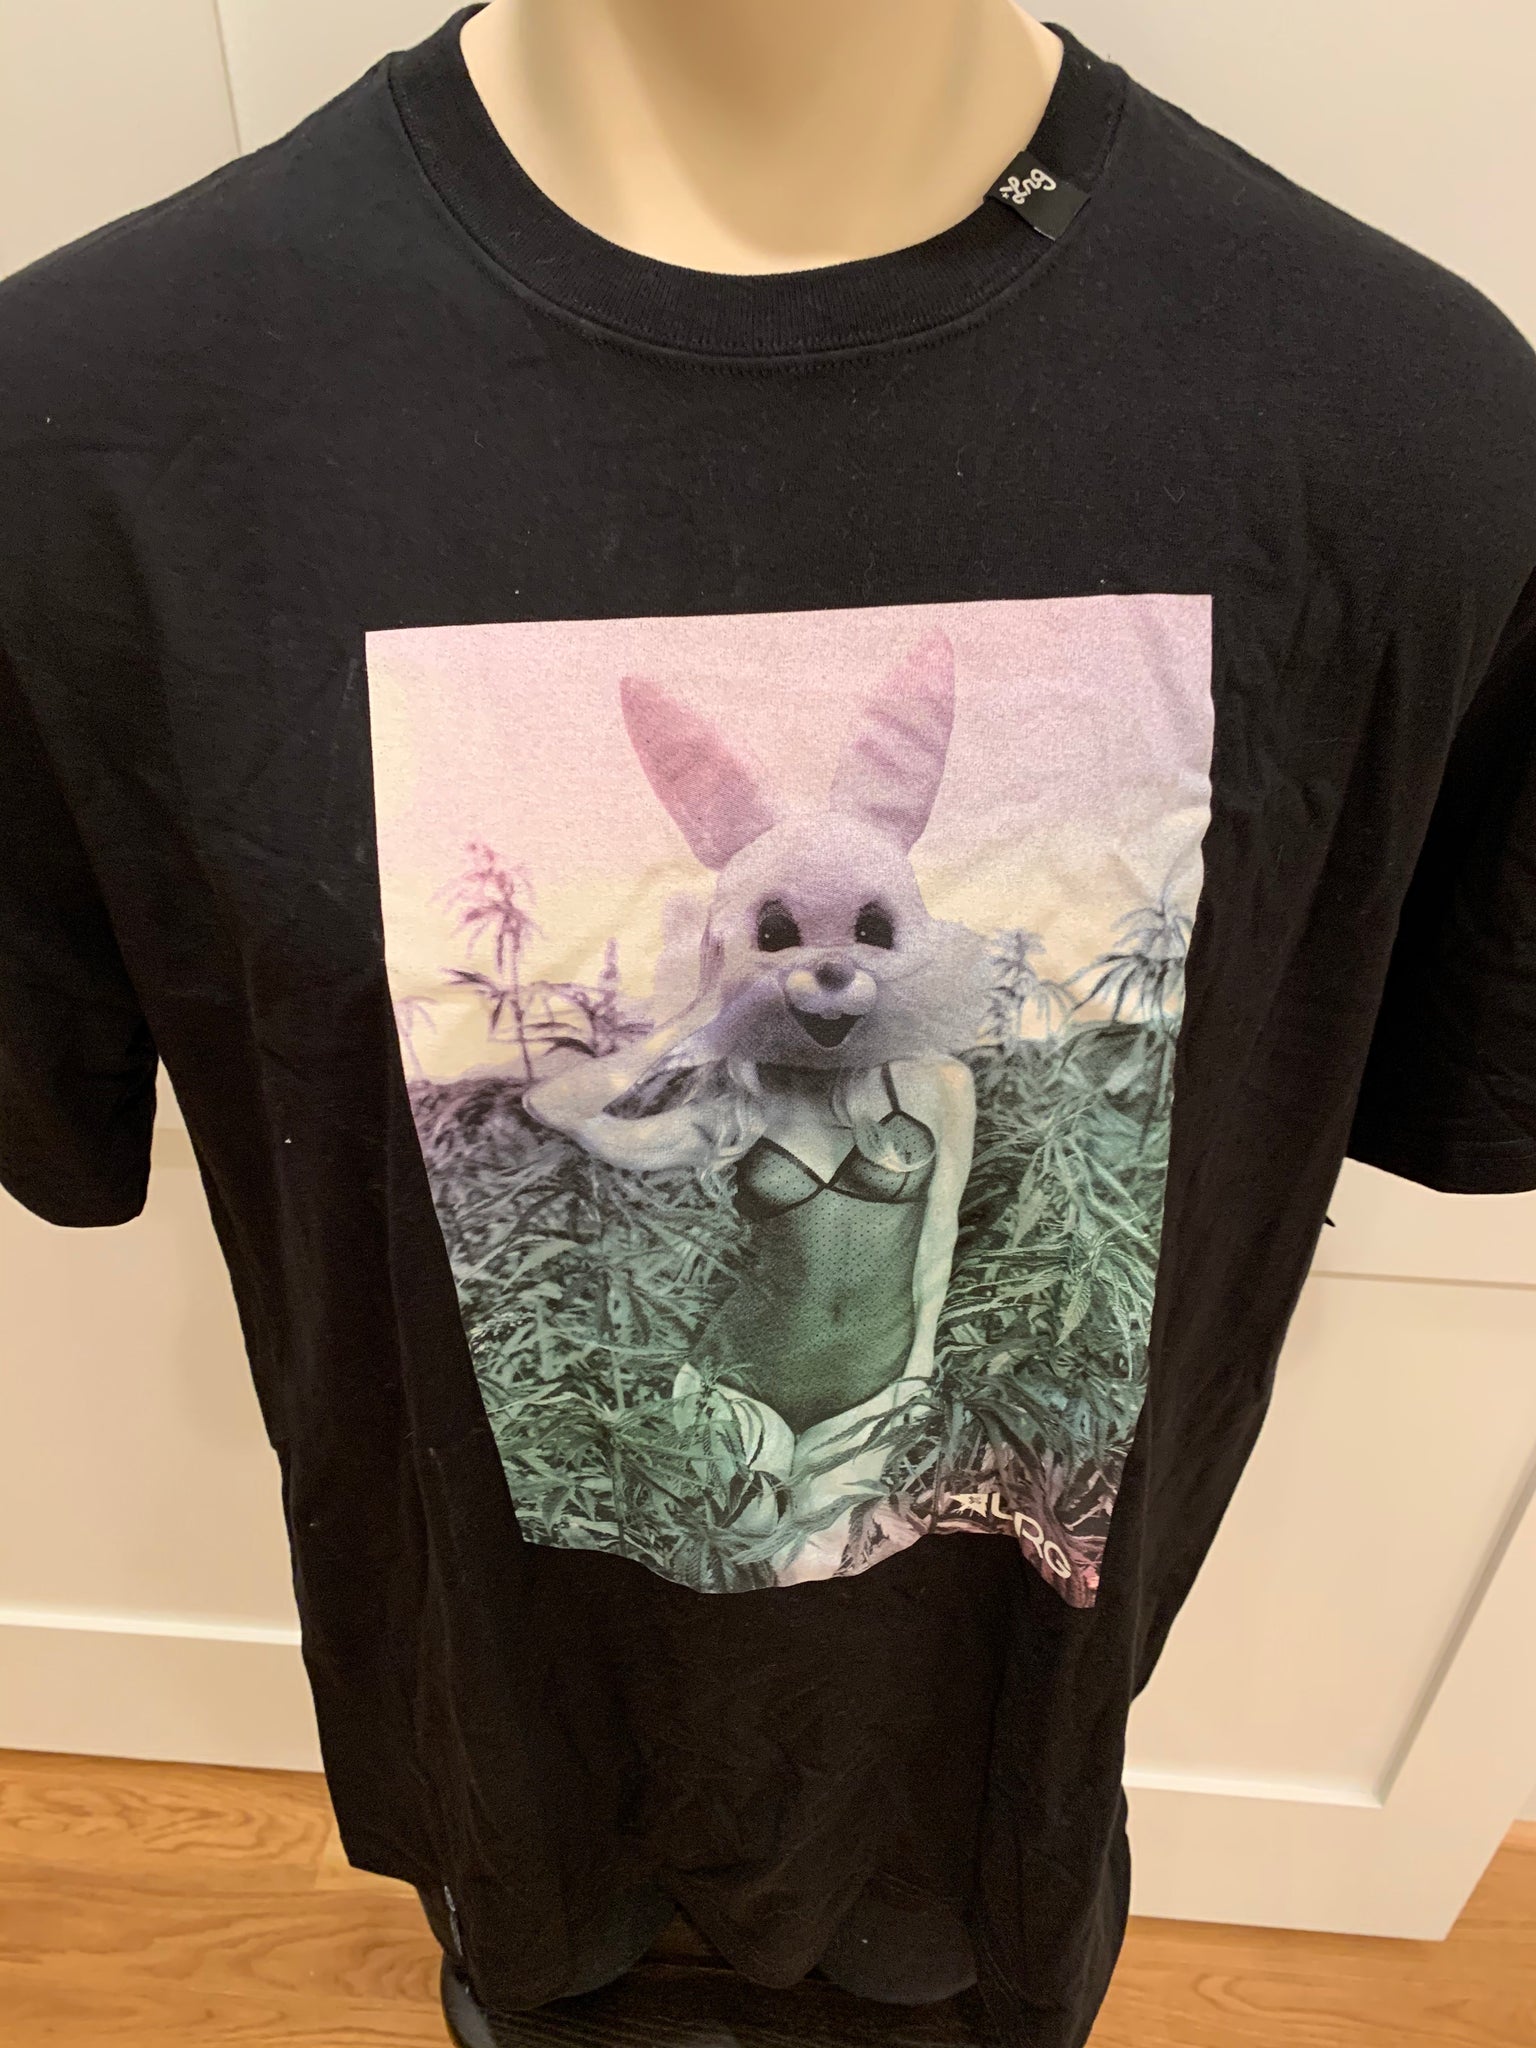 LRG "Rabbit" Tee Shirt - Black (XL)